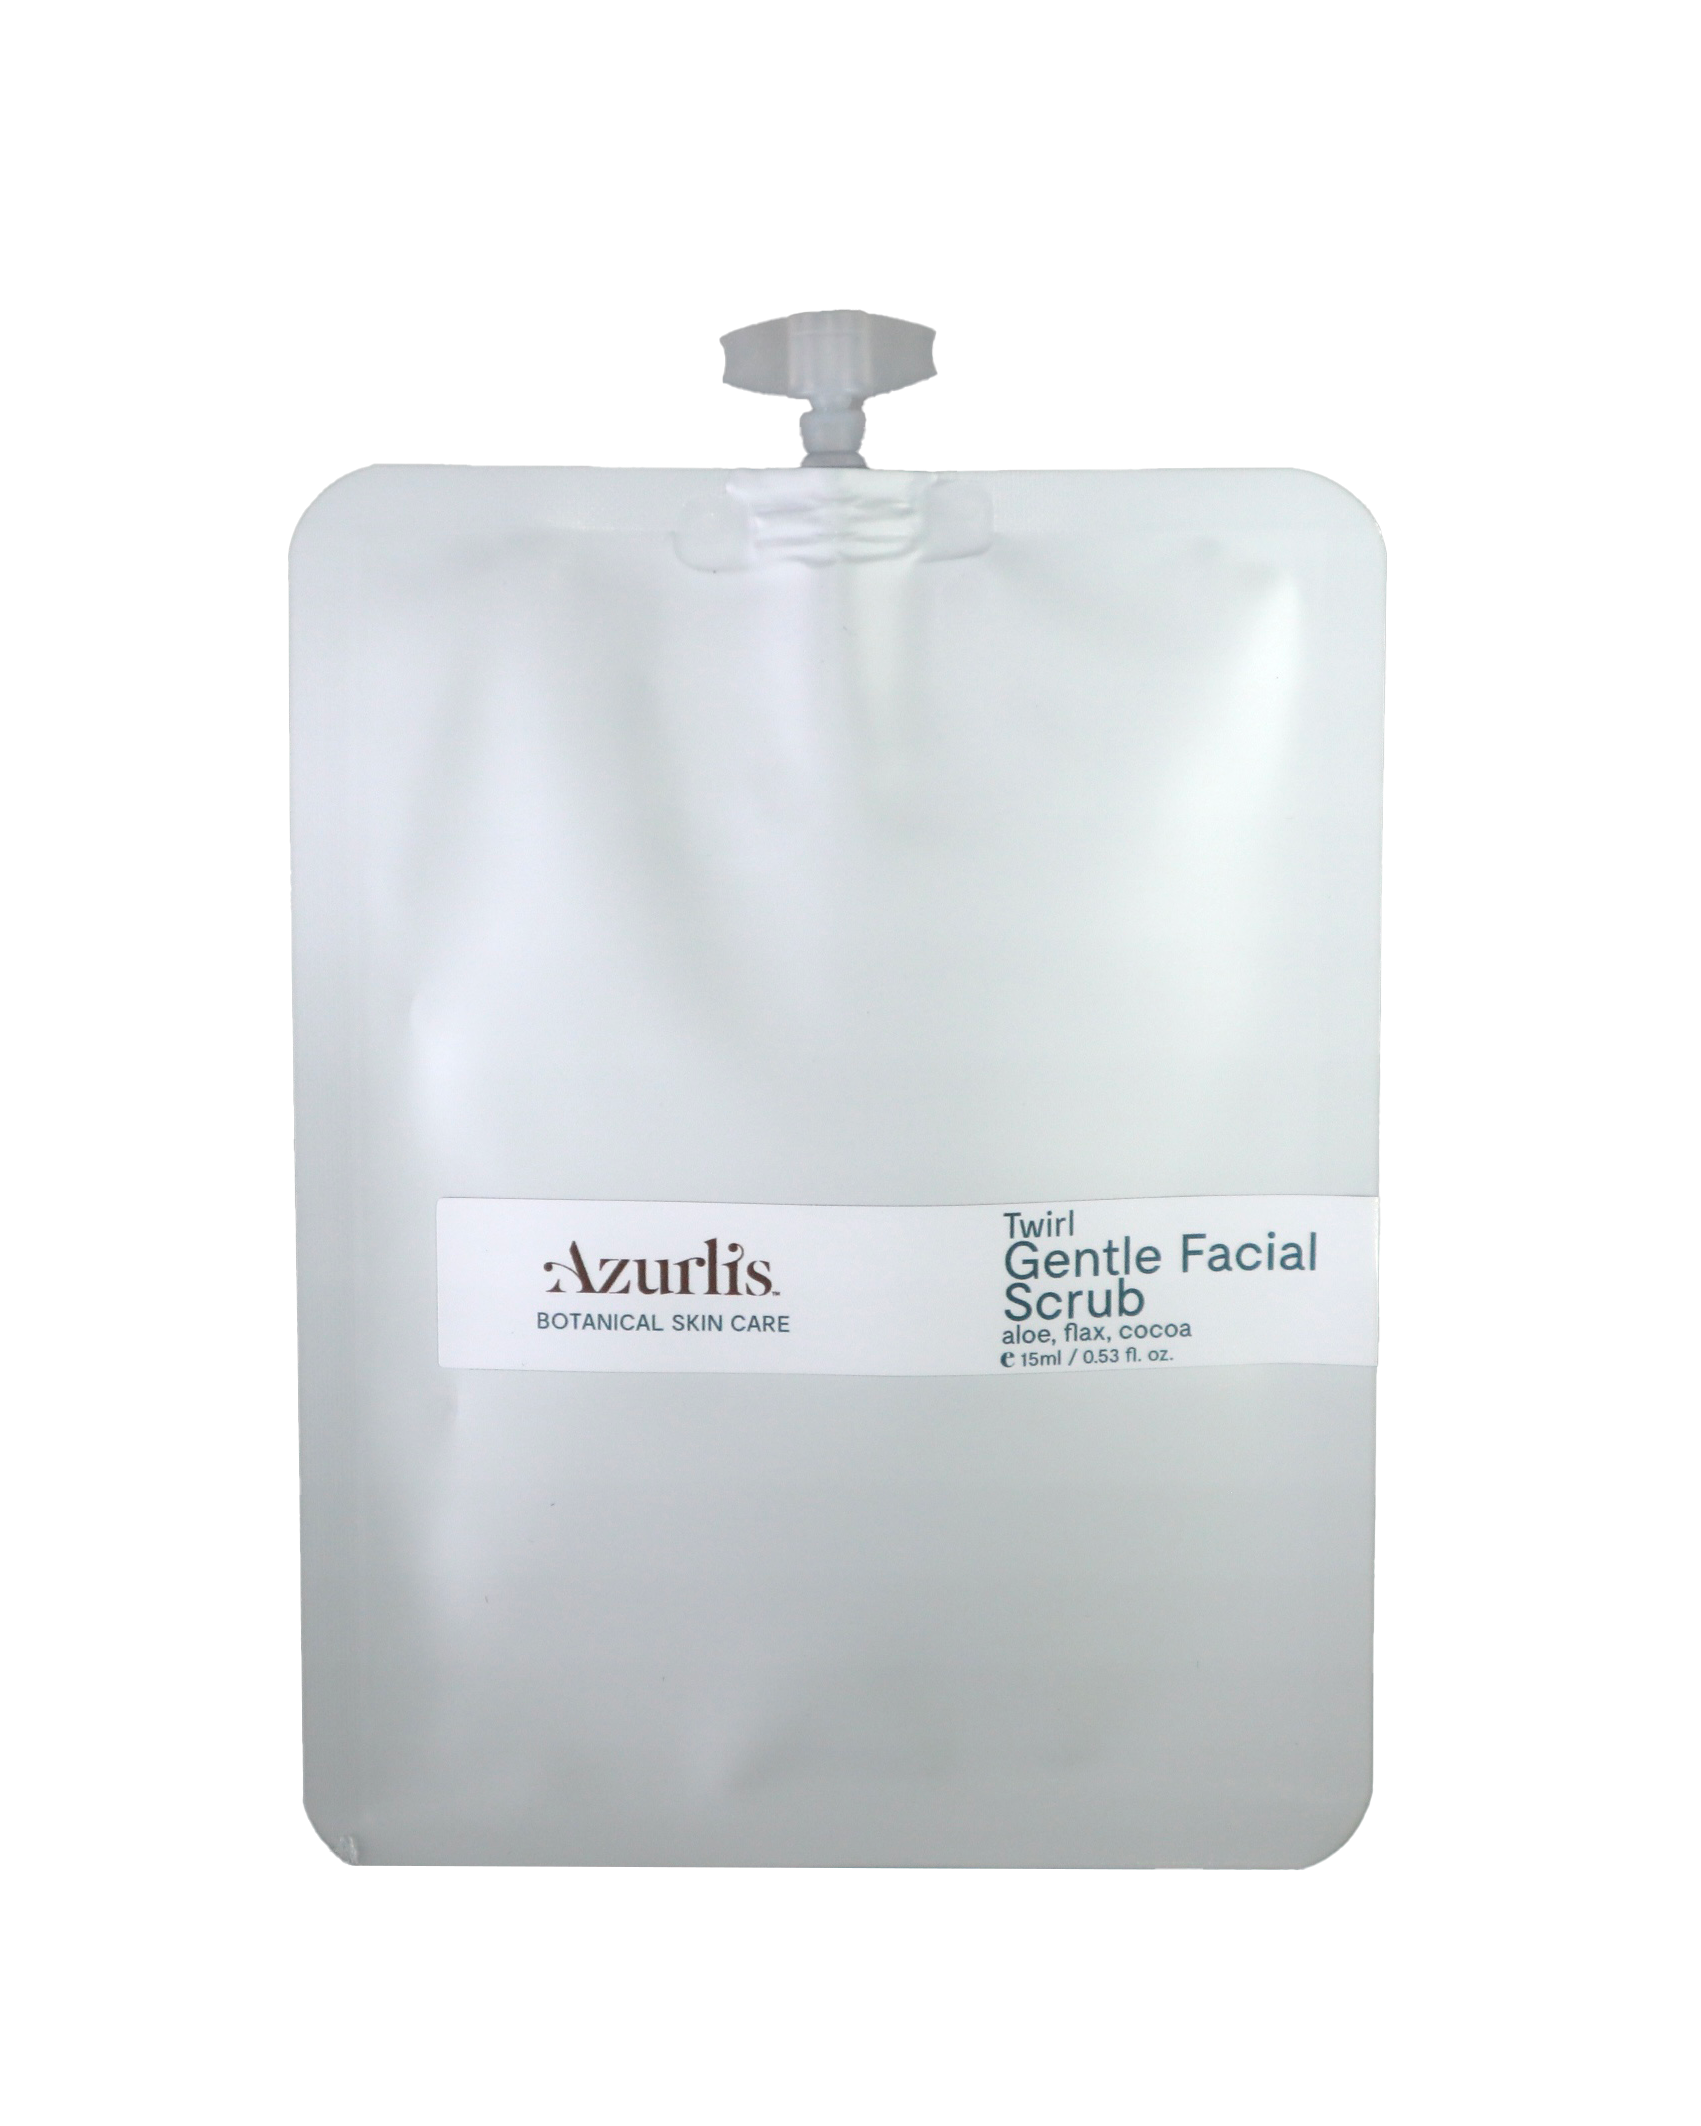 Azurlis™ Twirl Gentle Facial Scrub 50/30ml is a gentle yet deep cleansing exfoliator with jojoba wax beads as an abrasive agent.